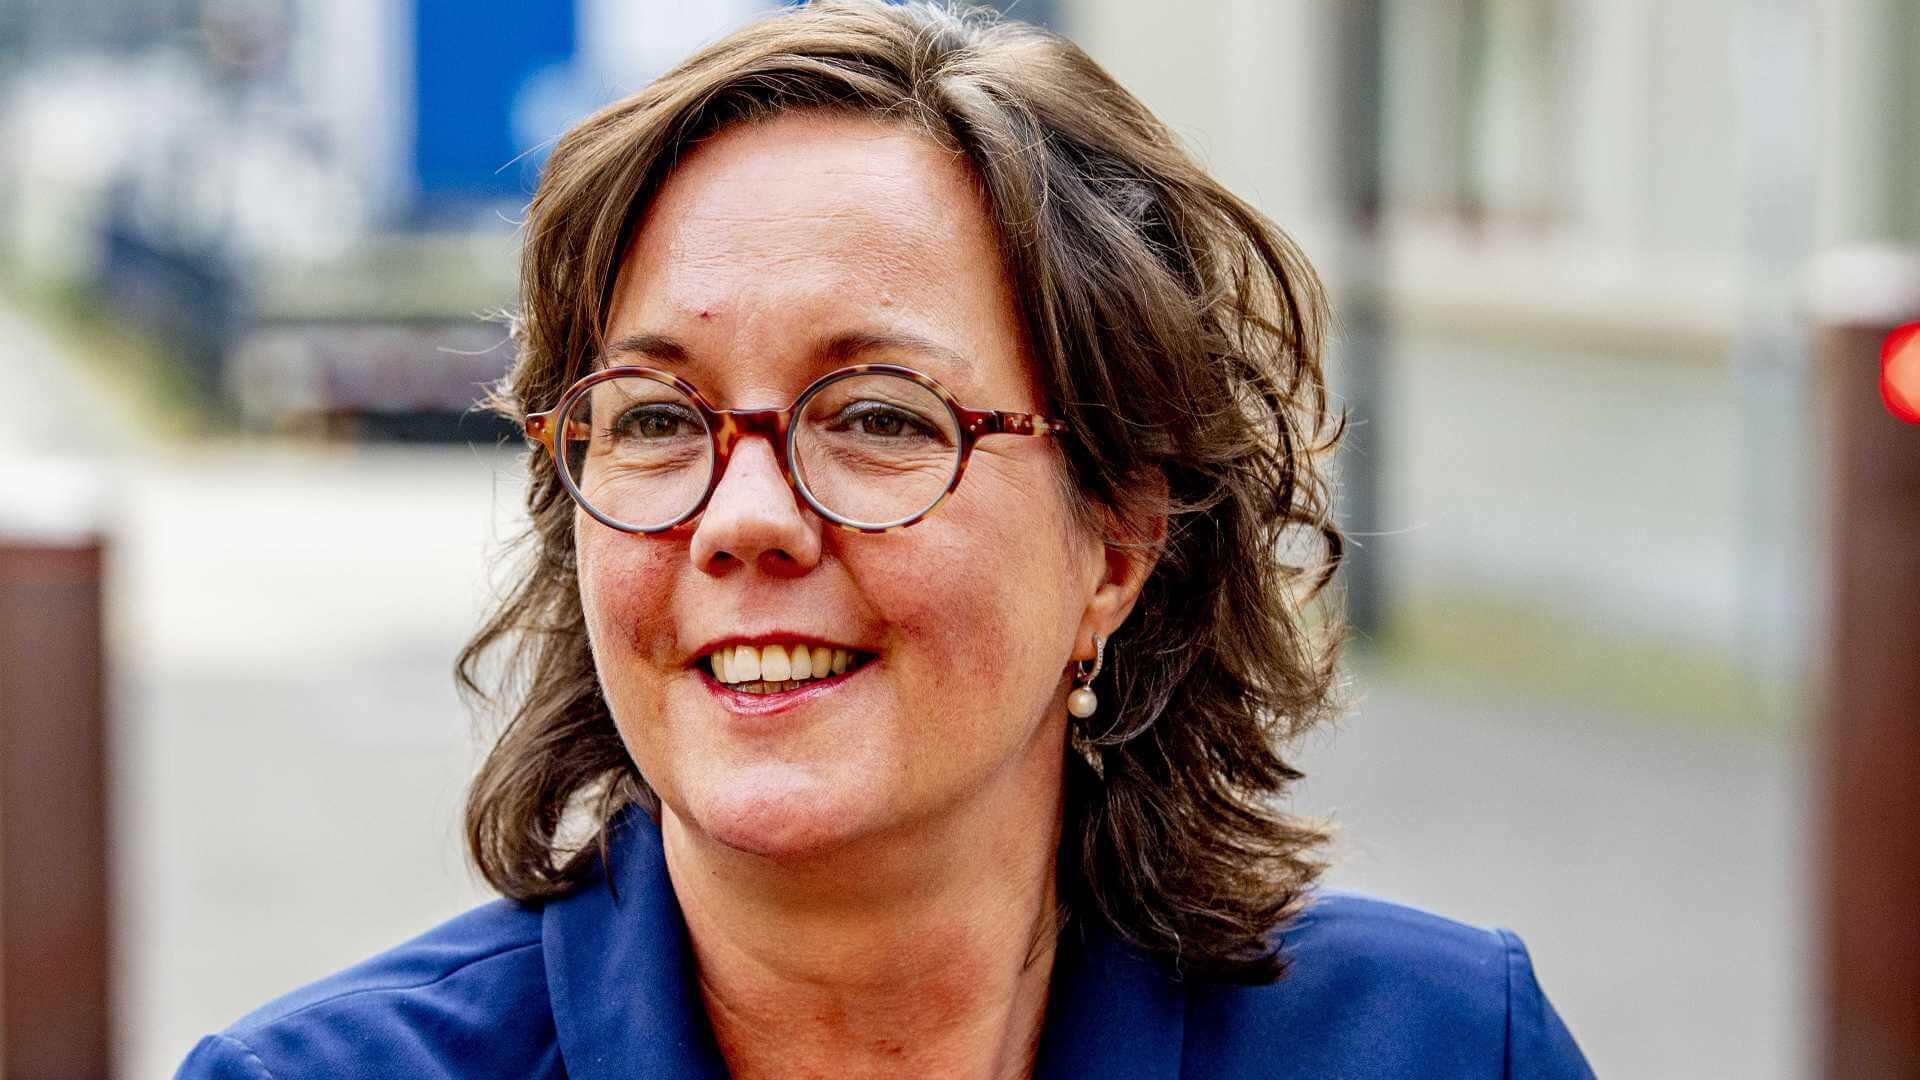 Die ehemalige Gesundheitsministerin der Niederlande, Tamara van Ark, im Juni 2021